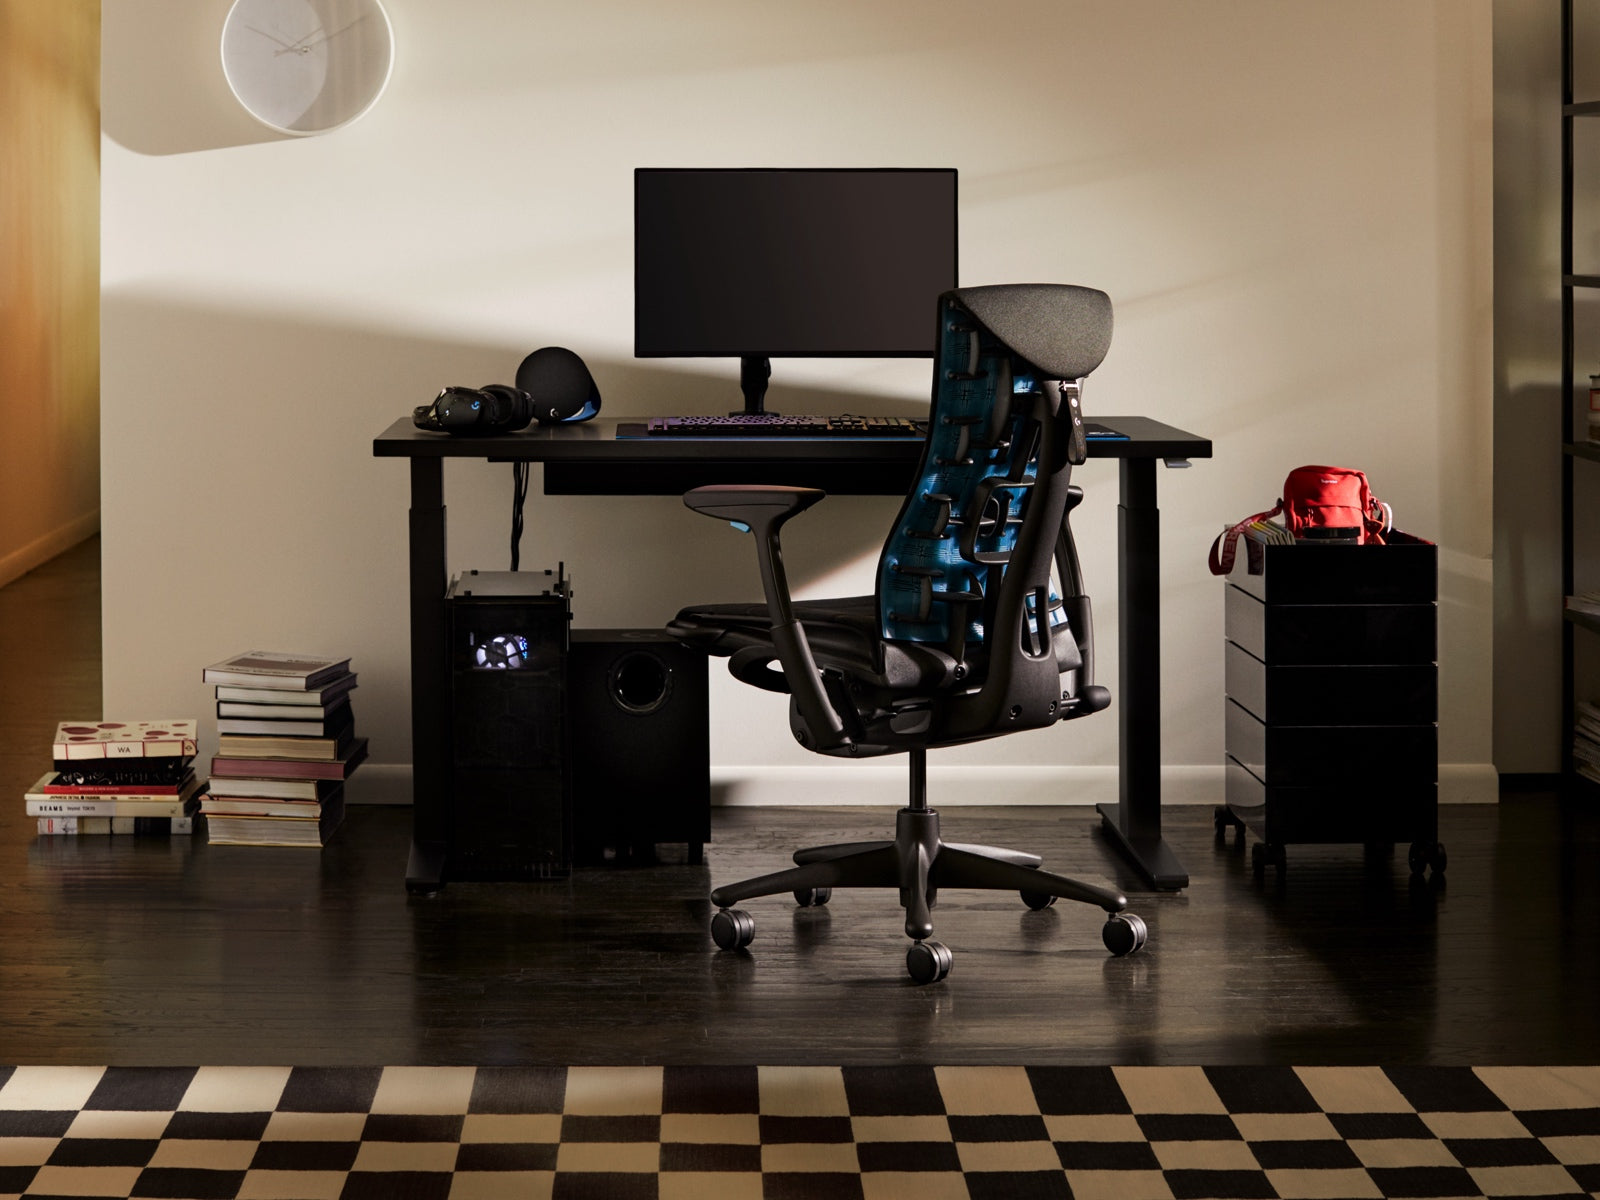 Embody Gaming Chair, Ratio Gaming Desk 및 Ollin Monitor Arm(전부 주거 환경에서의 내장 서가 앞에 있음)을 포함한, Herman Miller와 Logitech G 모두로부터 나온 전체 구성.